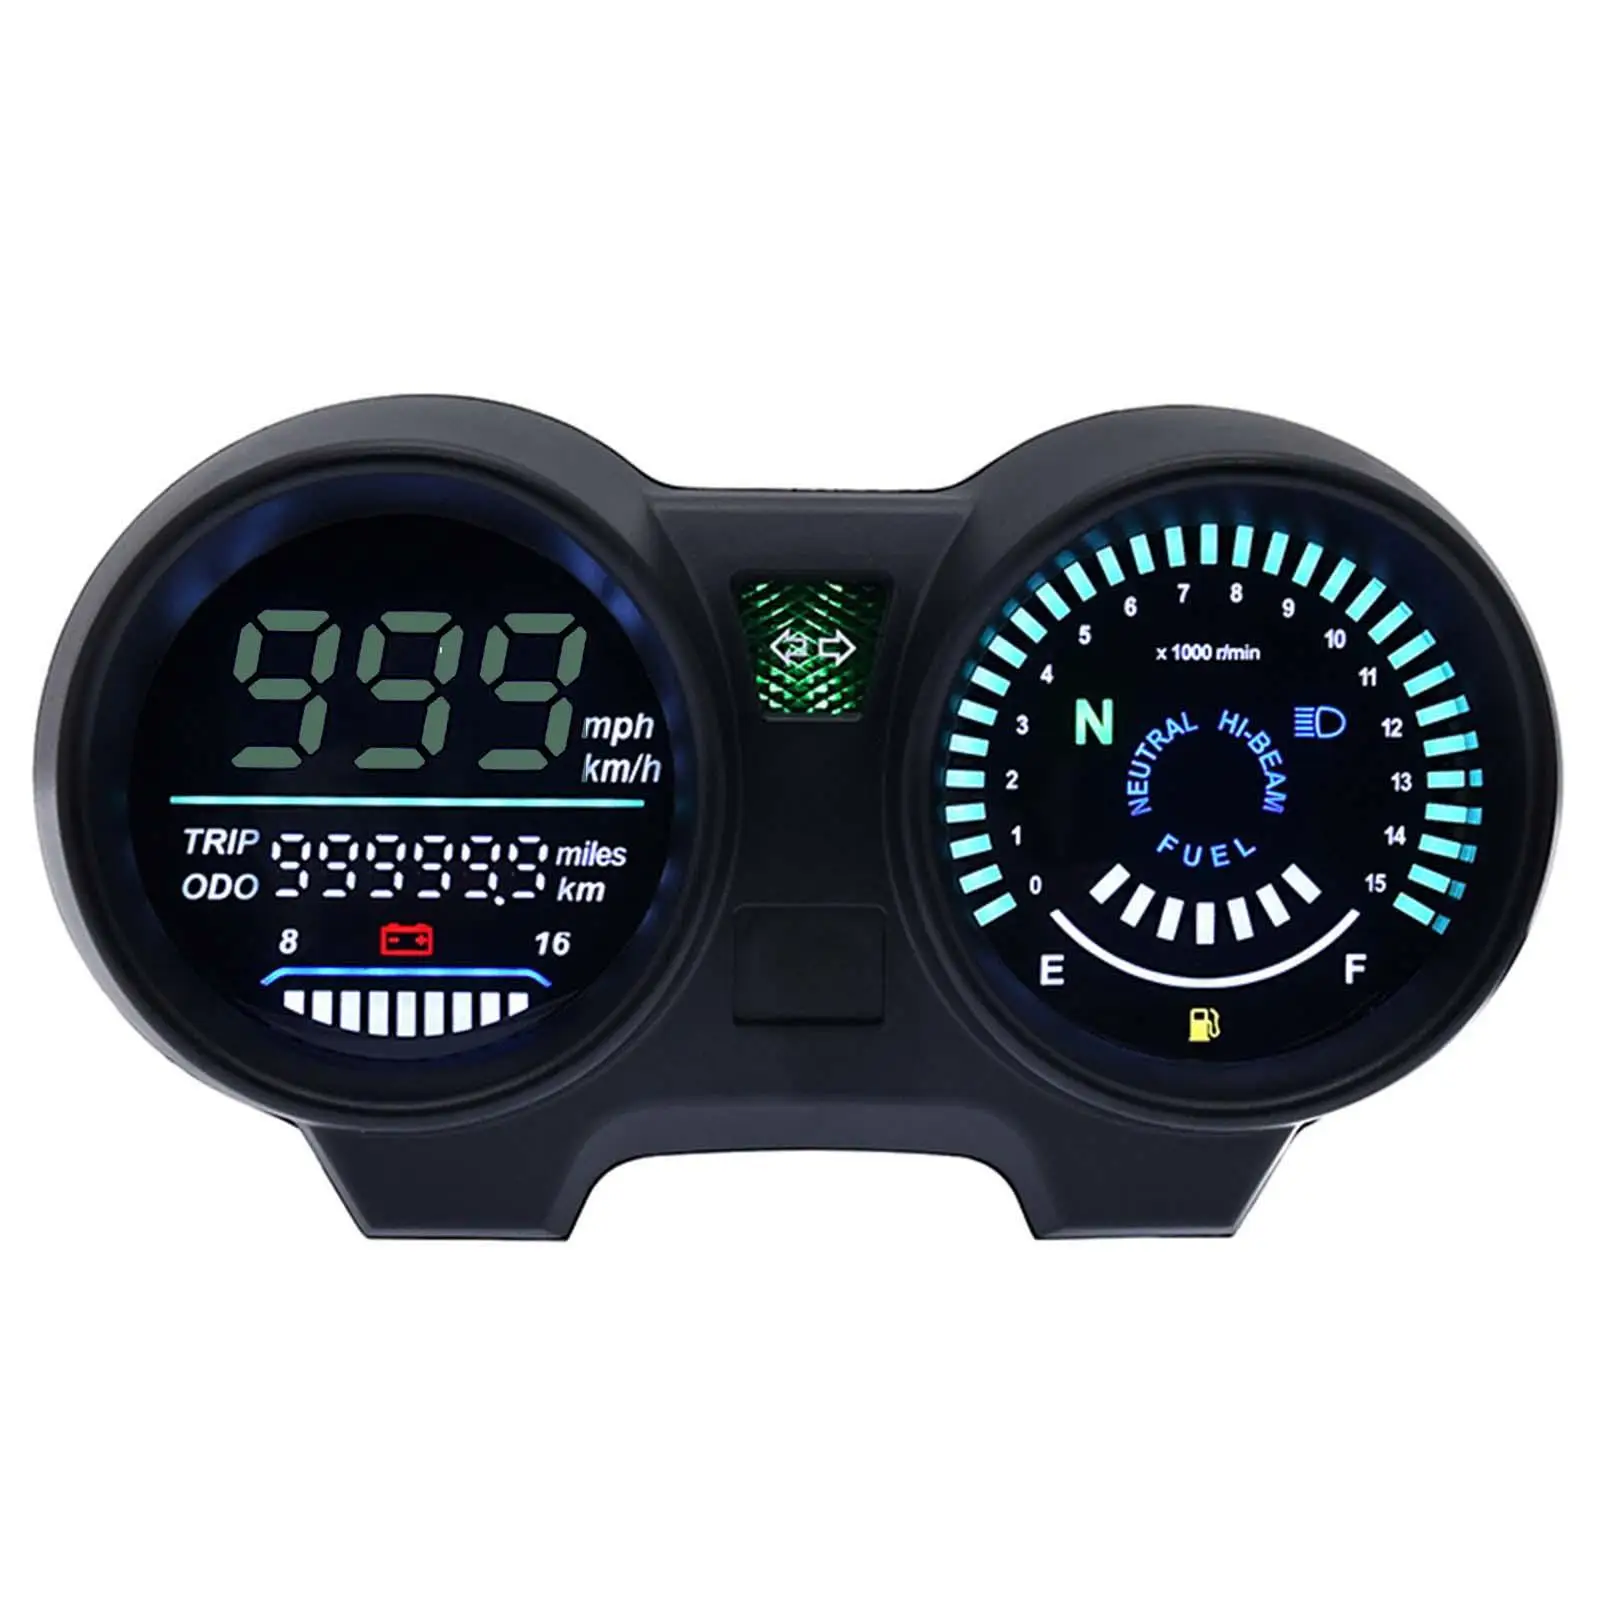 LED Digital Dashboard Odometer for Brazil Honda Titan150 CG150 Fan150